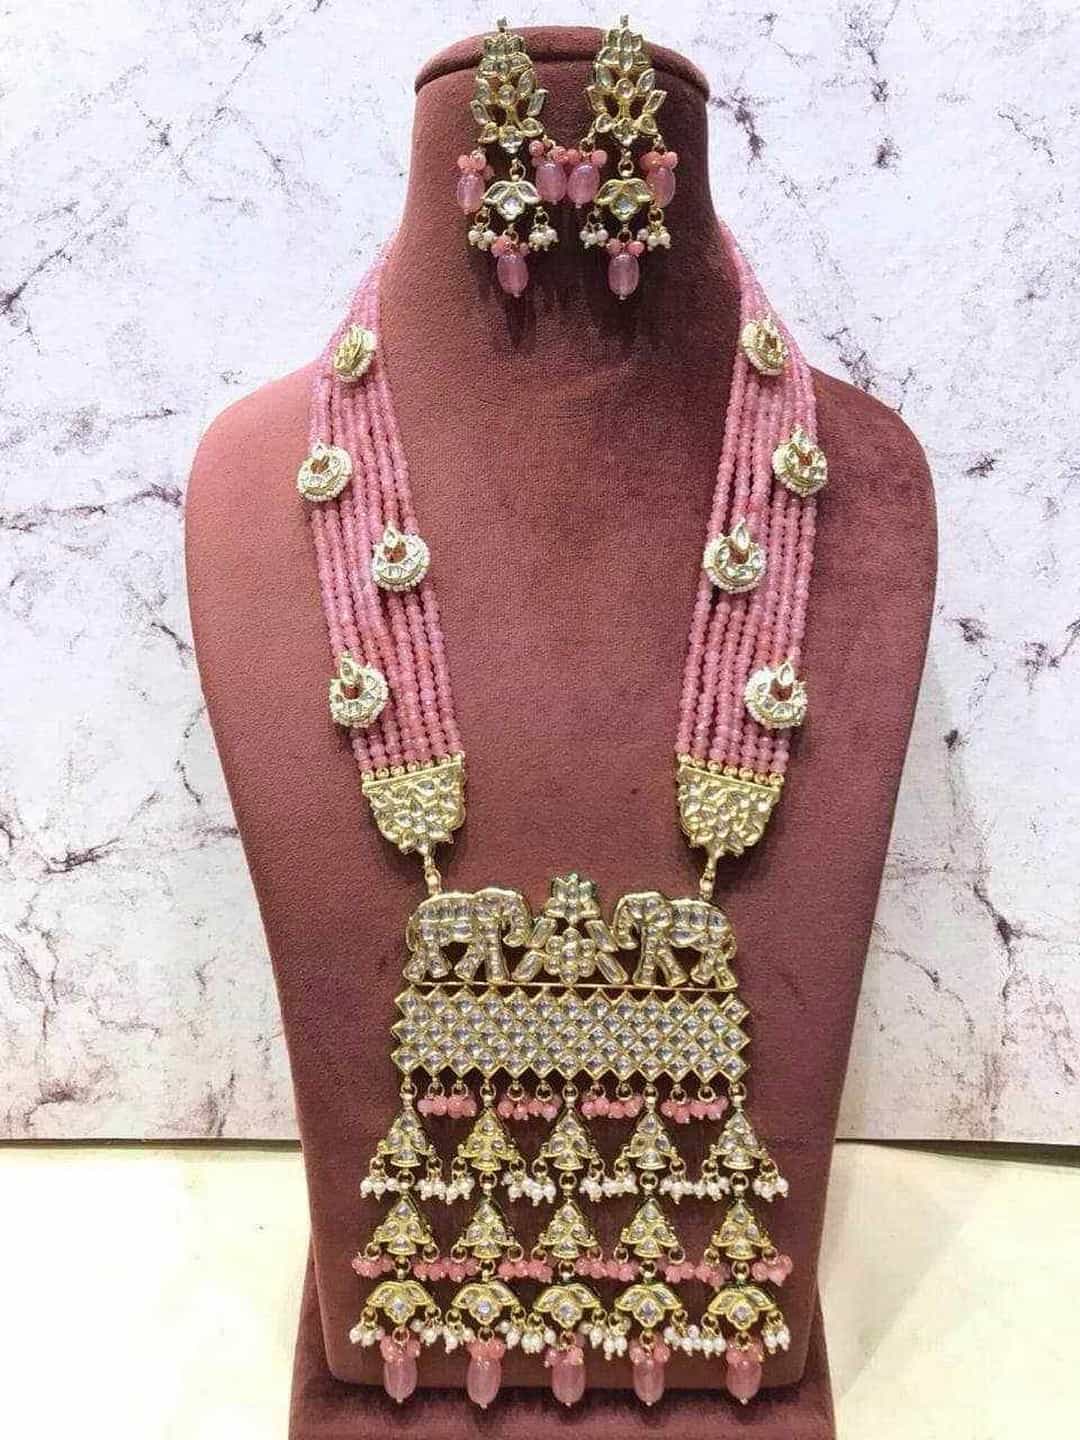 Ishhaara Green Elephant Pendant Necklace